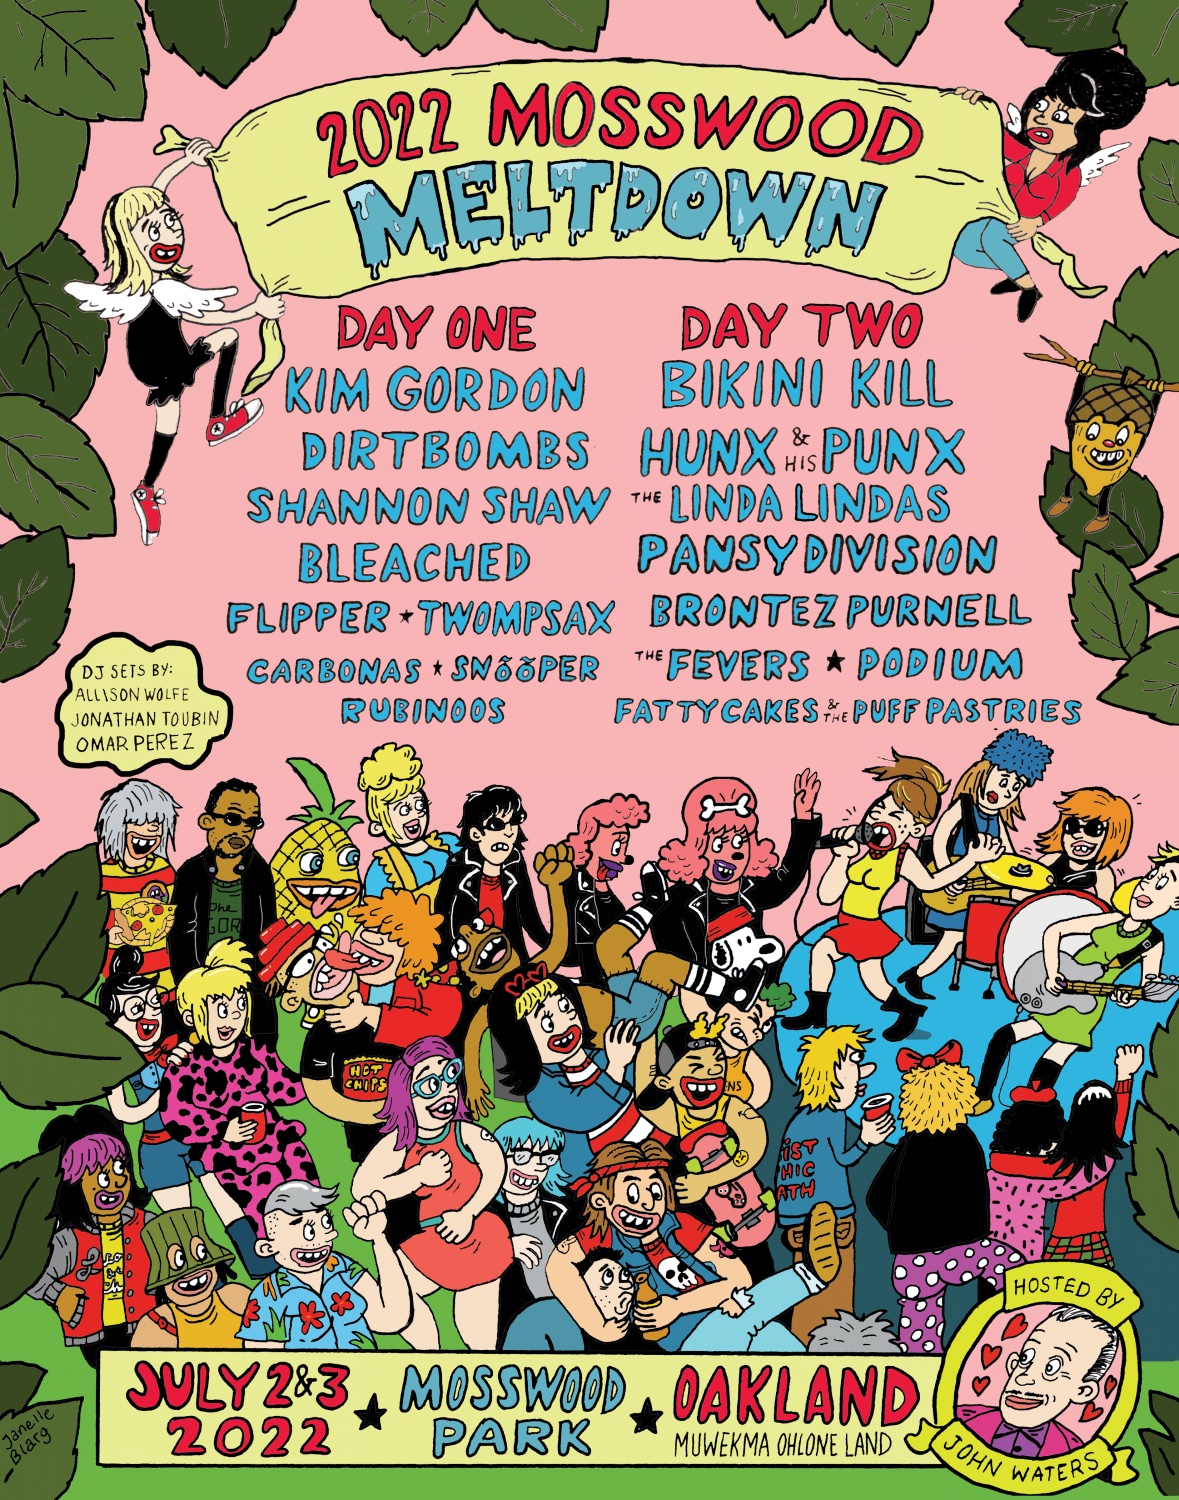 Mosswood Meltdown 2022 Festival Cut It Out Magazine